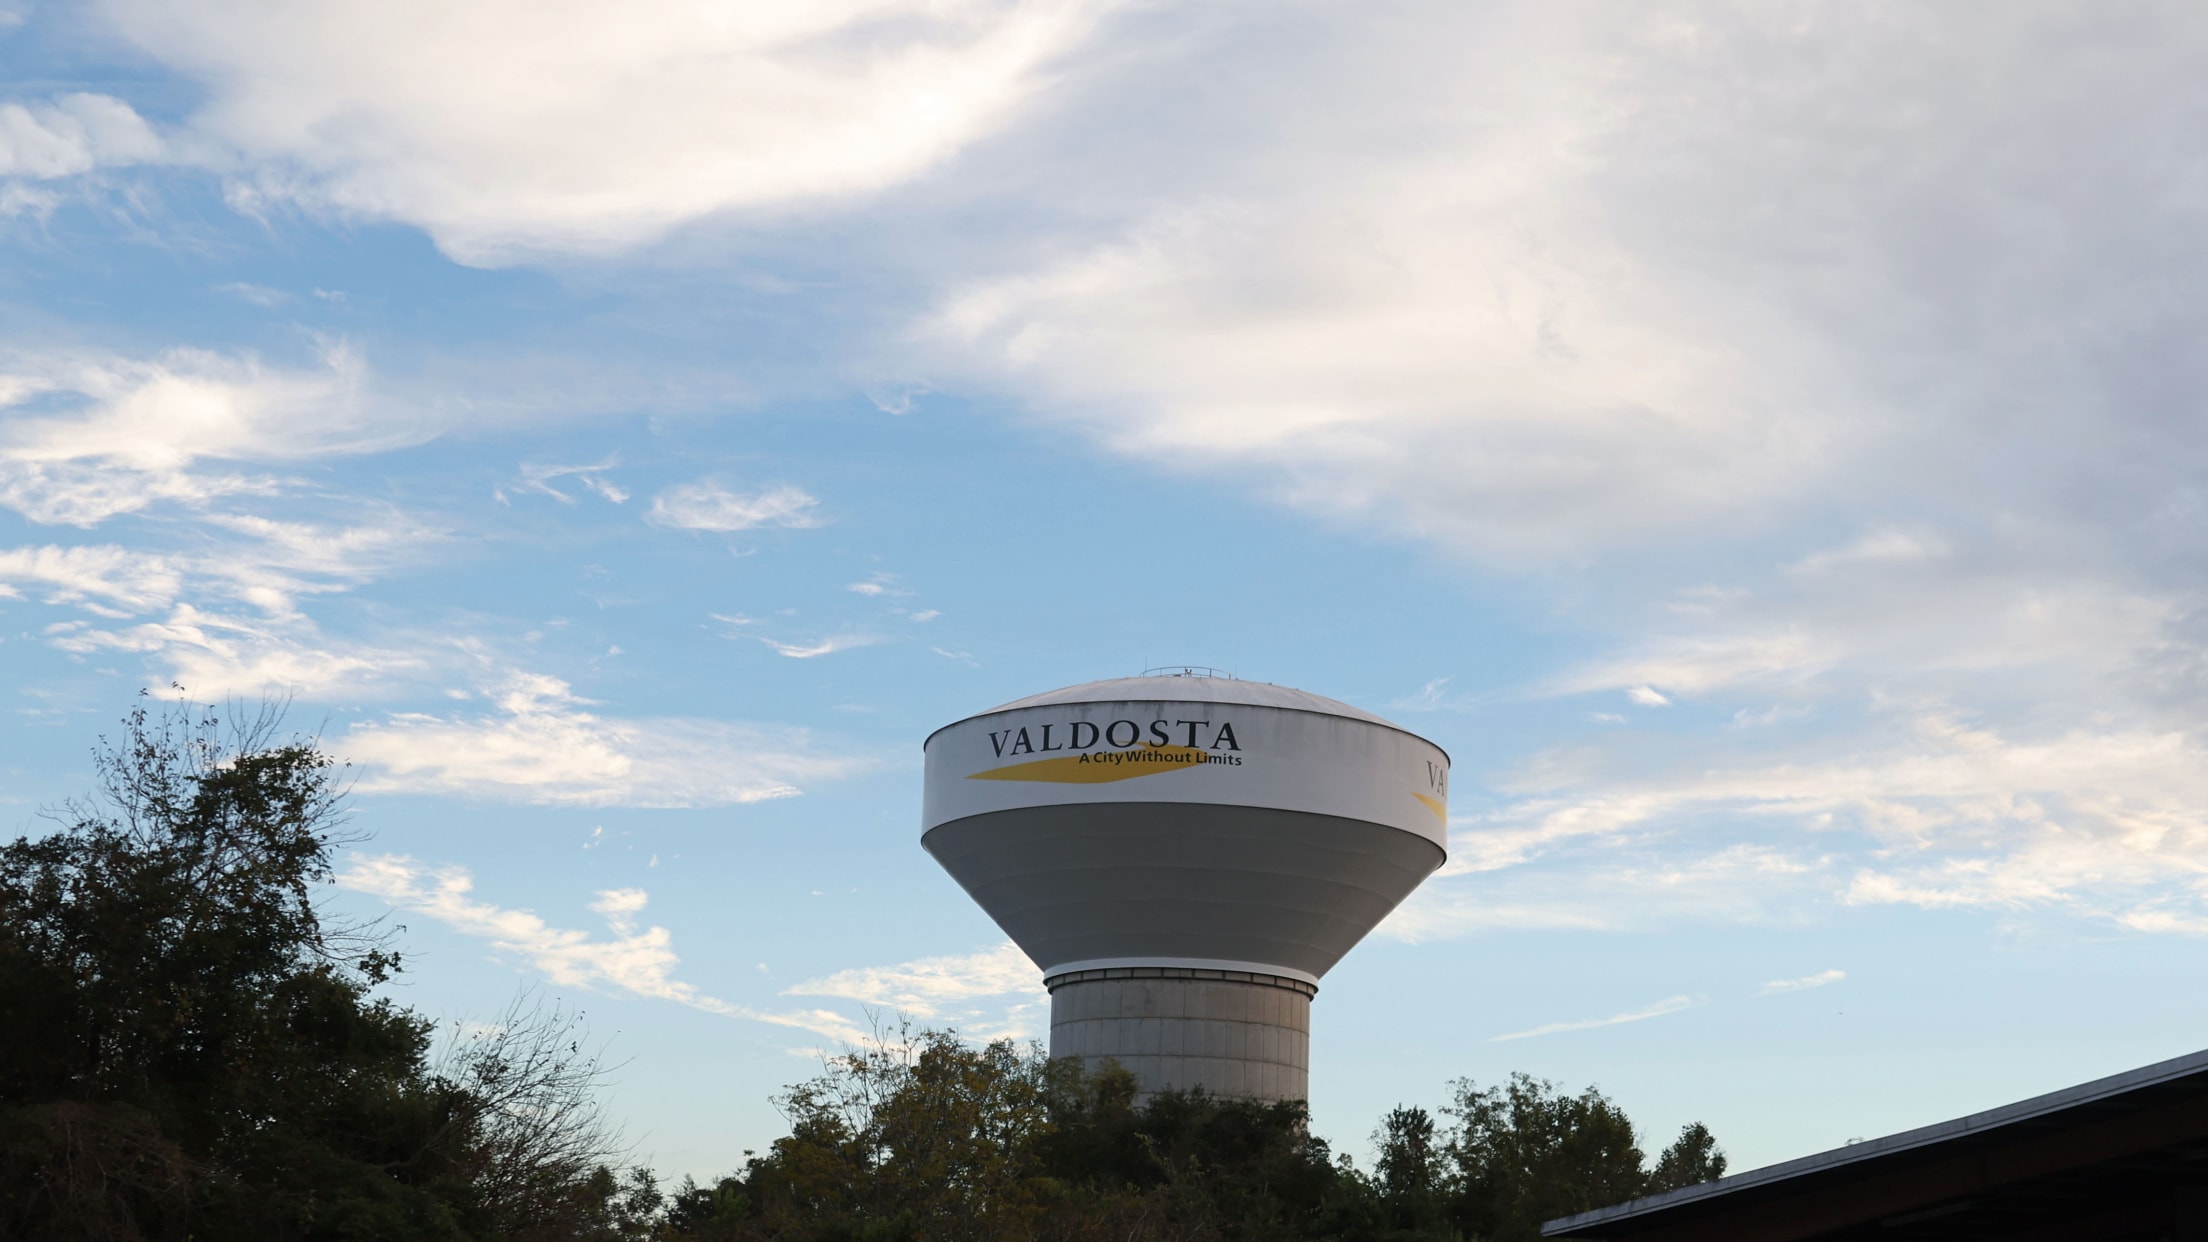 Water tower located in Valdosta, Georgia.